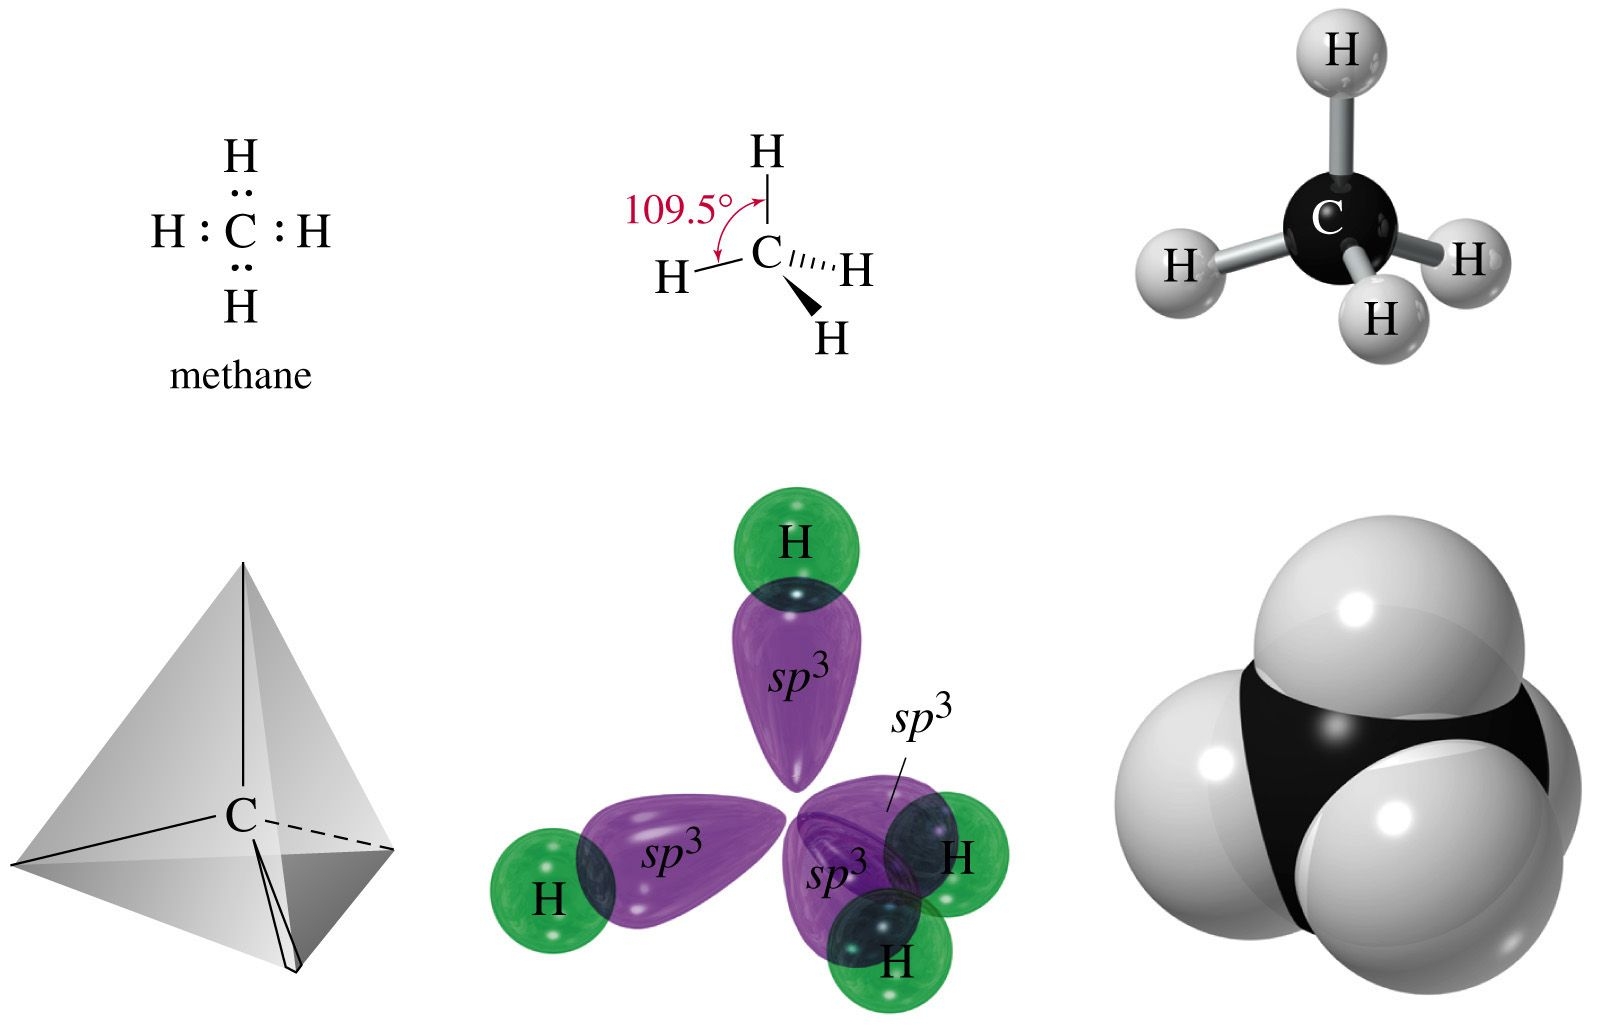 N метана. Модель молекулы метана ch4. Строение молекулы метана. Метан ch4. Пространственная модель молекулы метана.